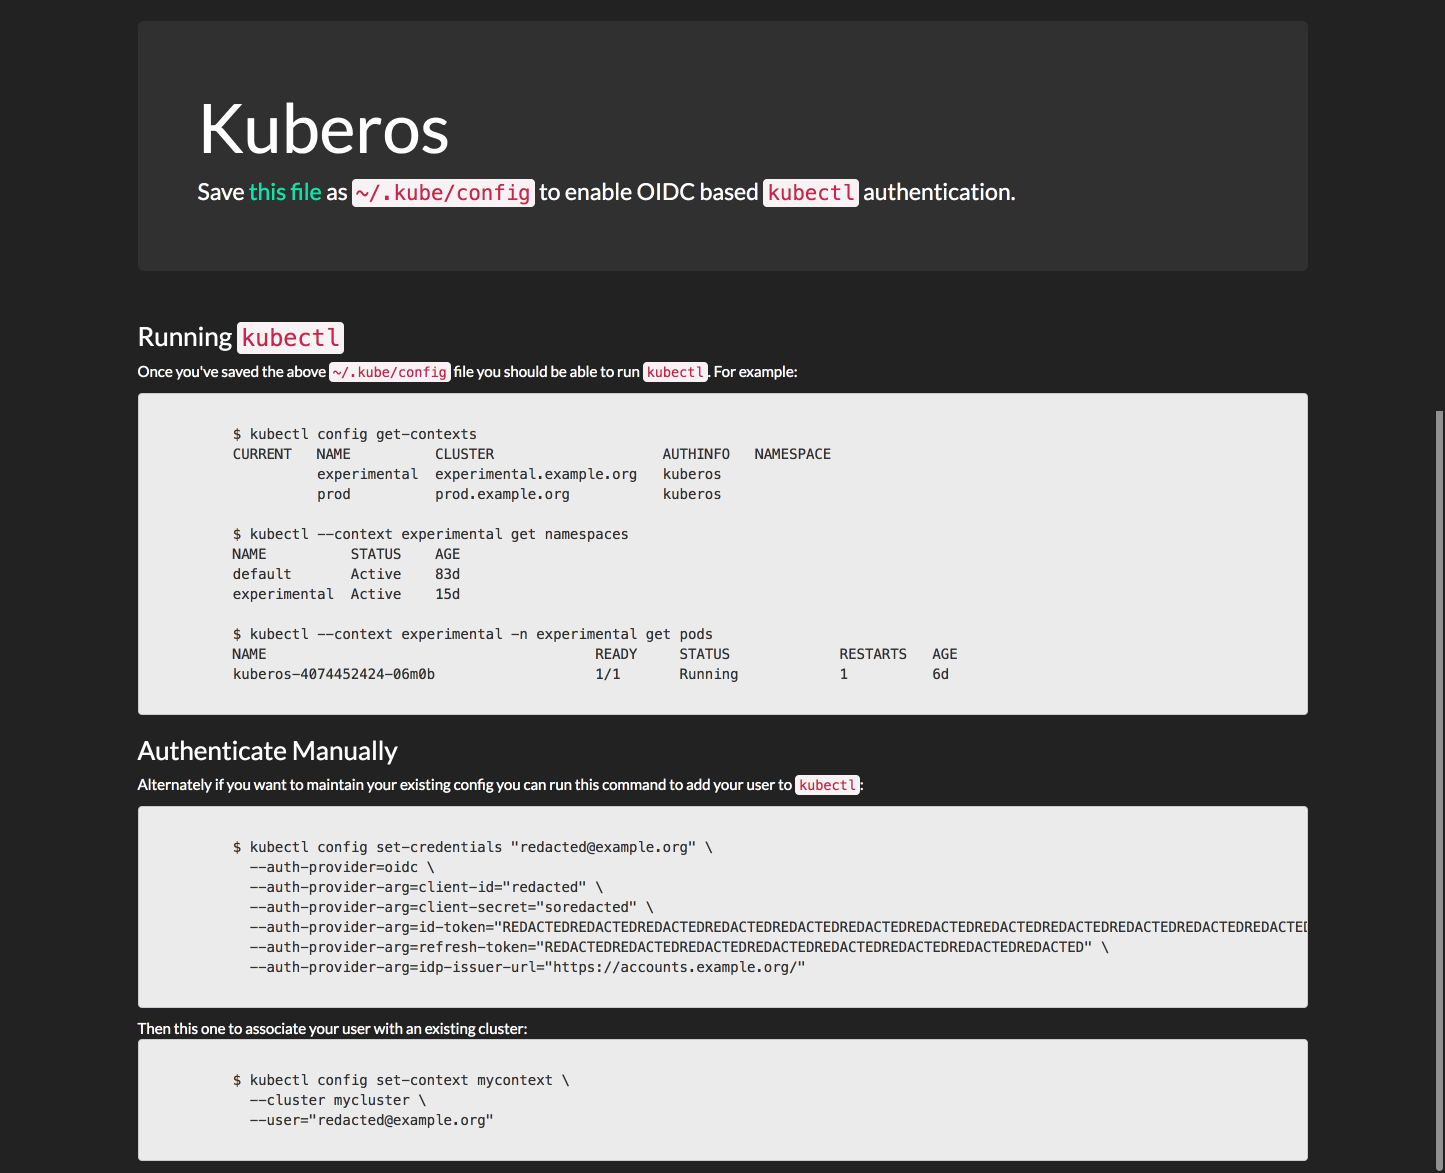 The kuberos UI